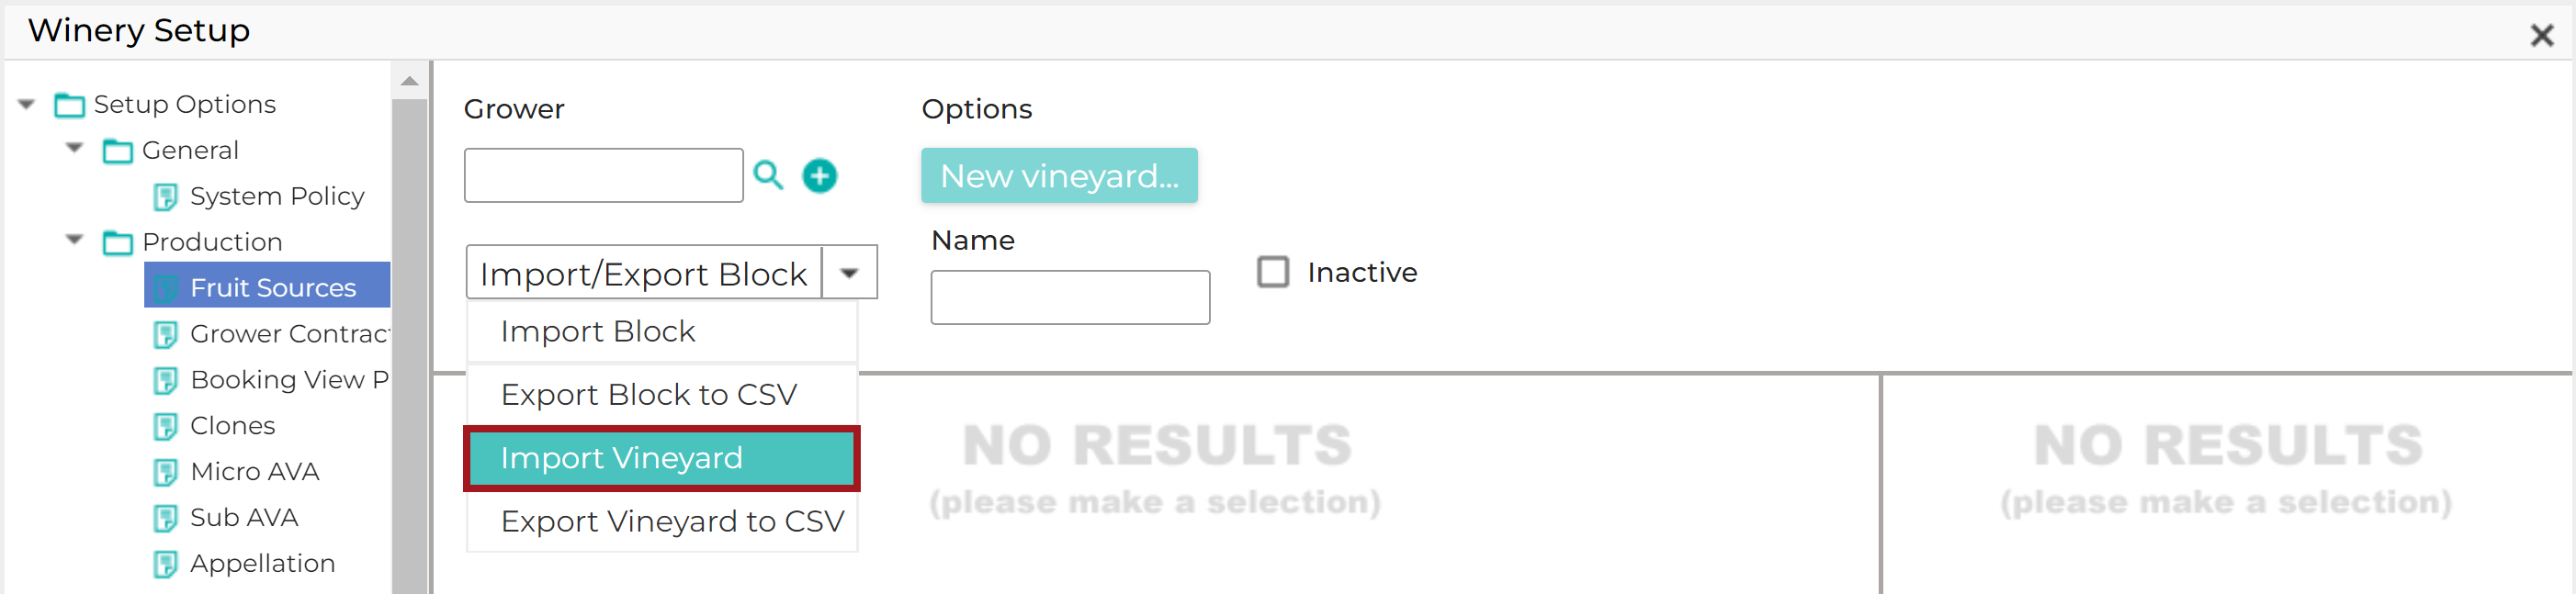 Winery_Setup_-_Fruit_Sources_-_Import_Vineyard_20220902.png